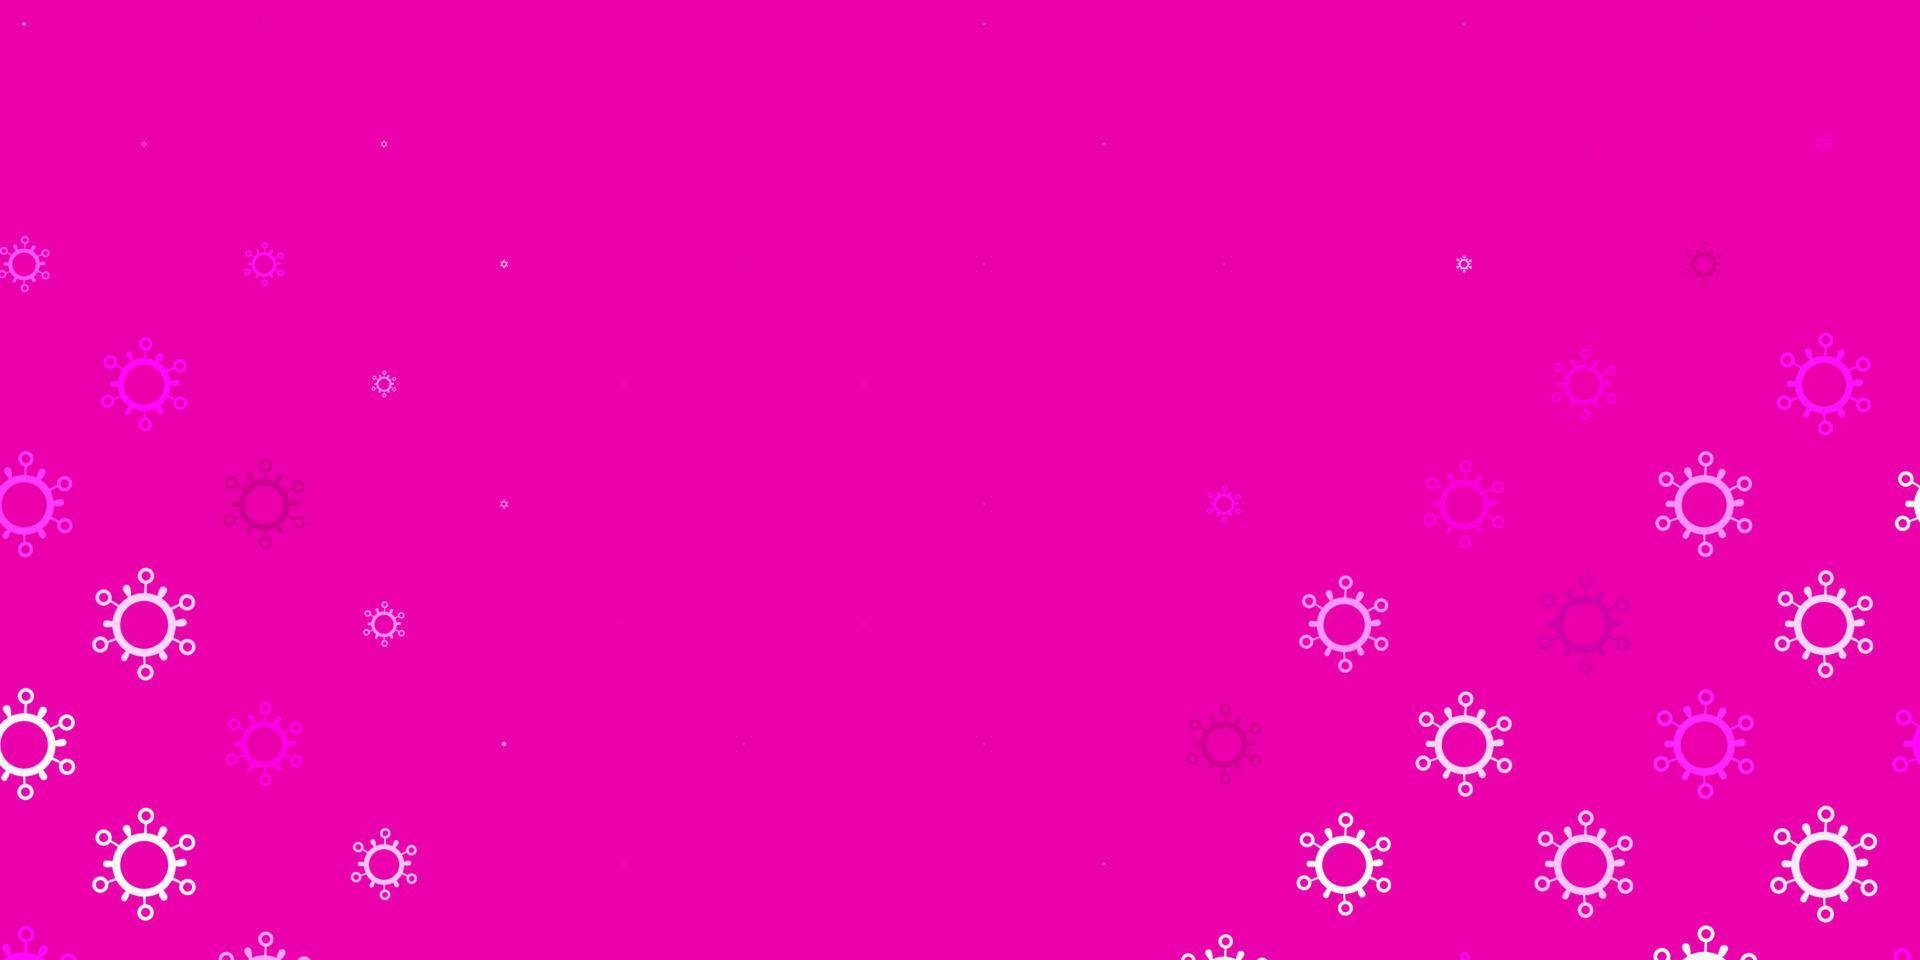 pano de fundo vector rosa claro com símbolos de vírus.